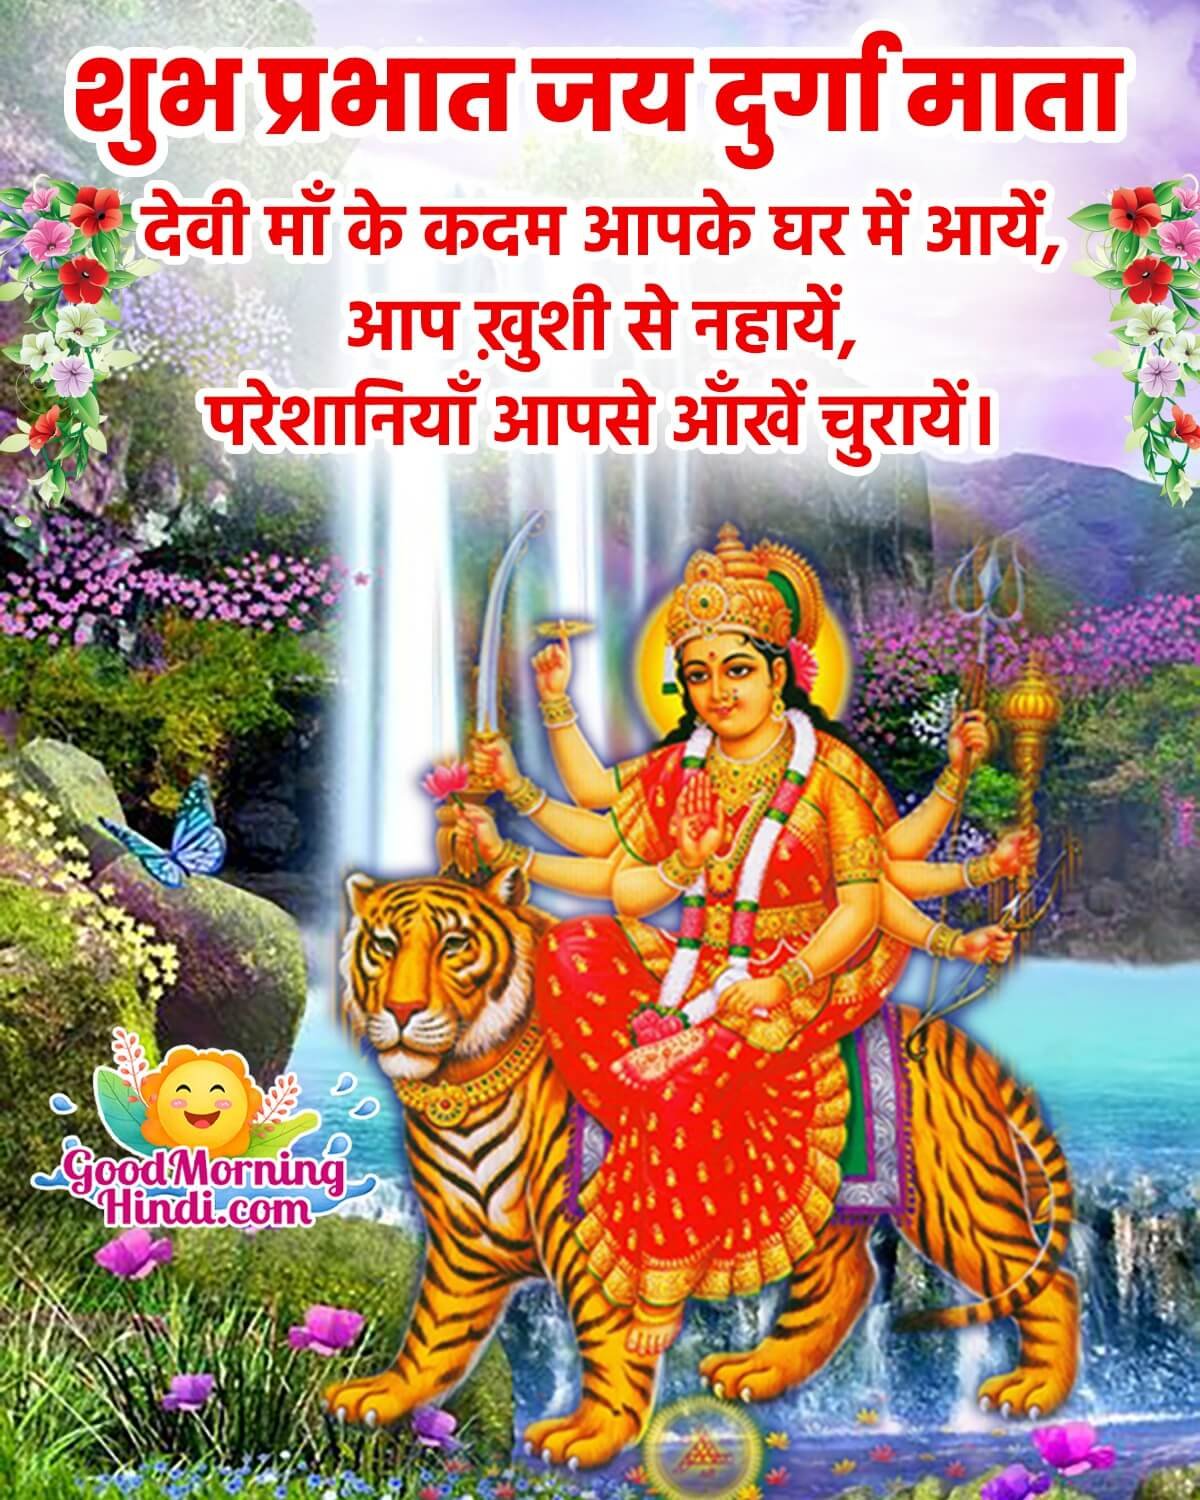 Good Morning Durga Mata Wishes In Hindi - Good Morning Wishes ...